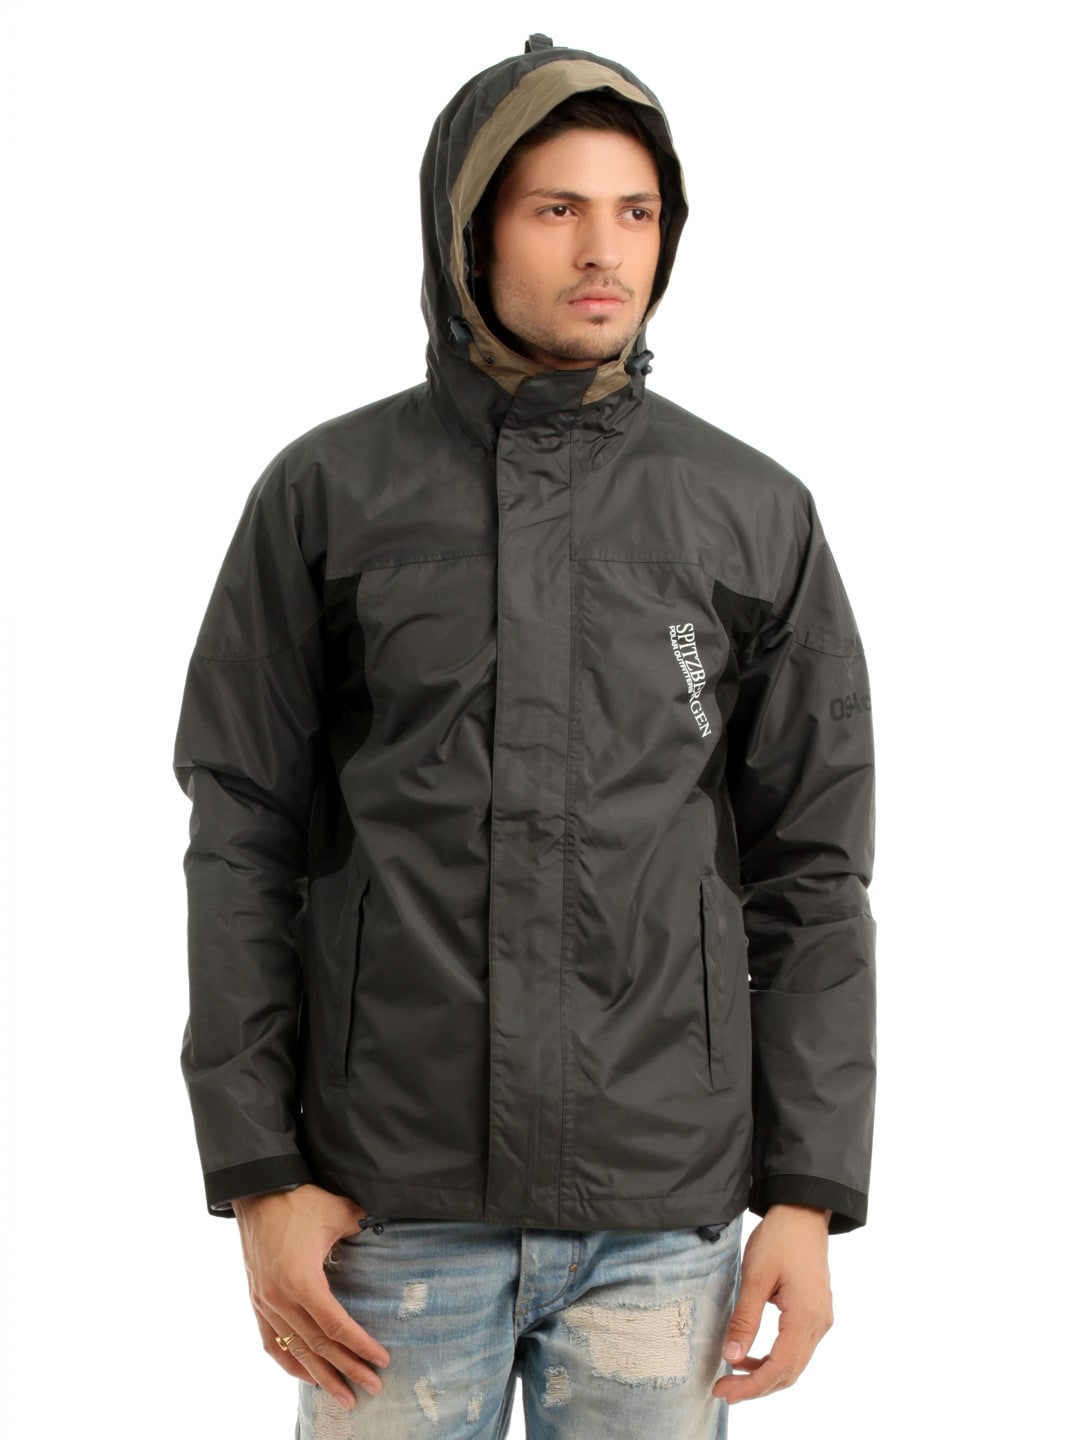 Just Natural Unisex Grey Rain Jacket